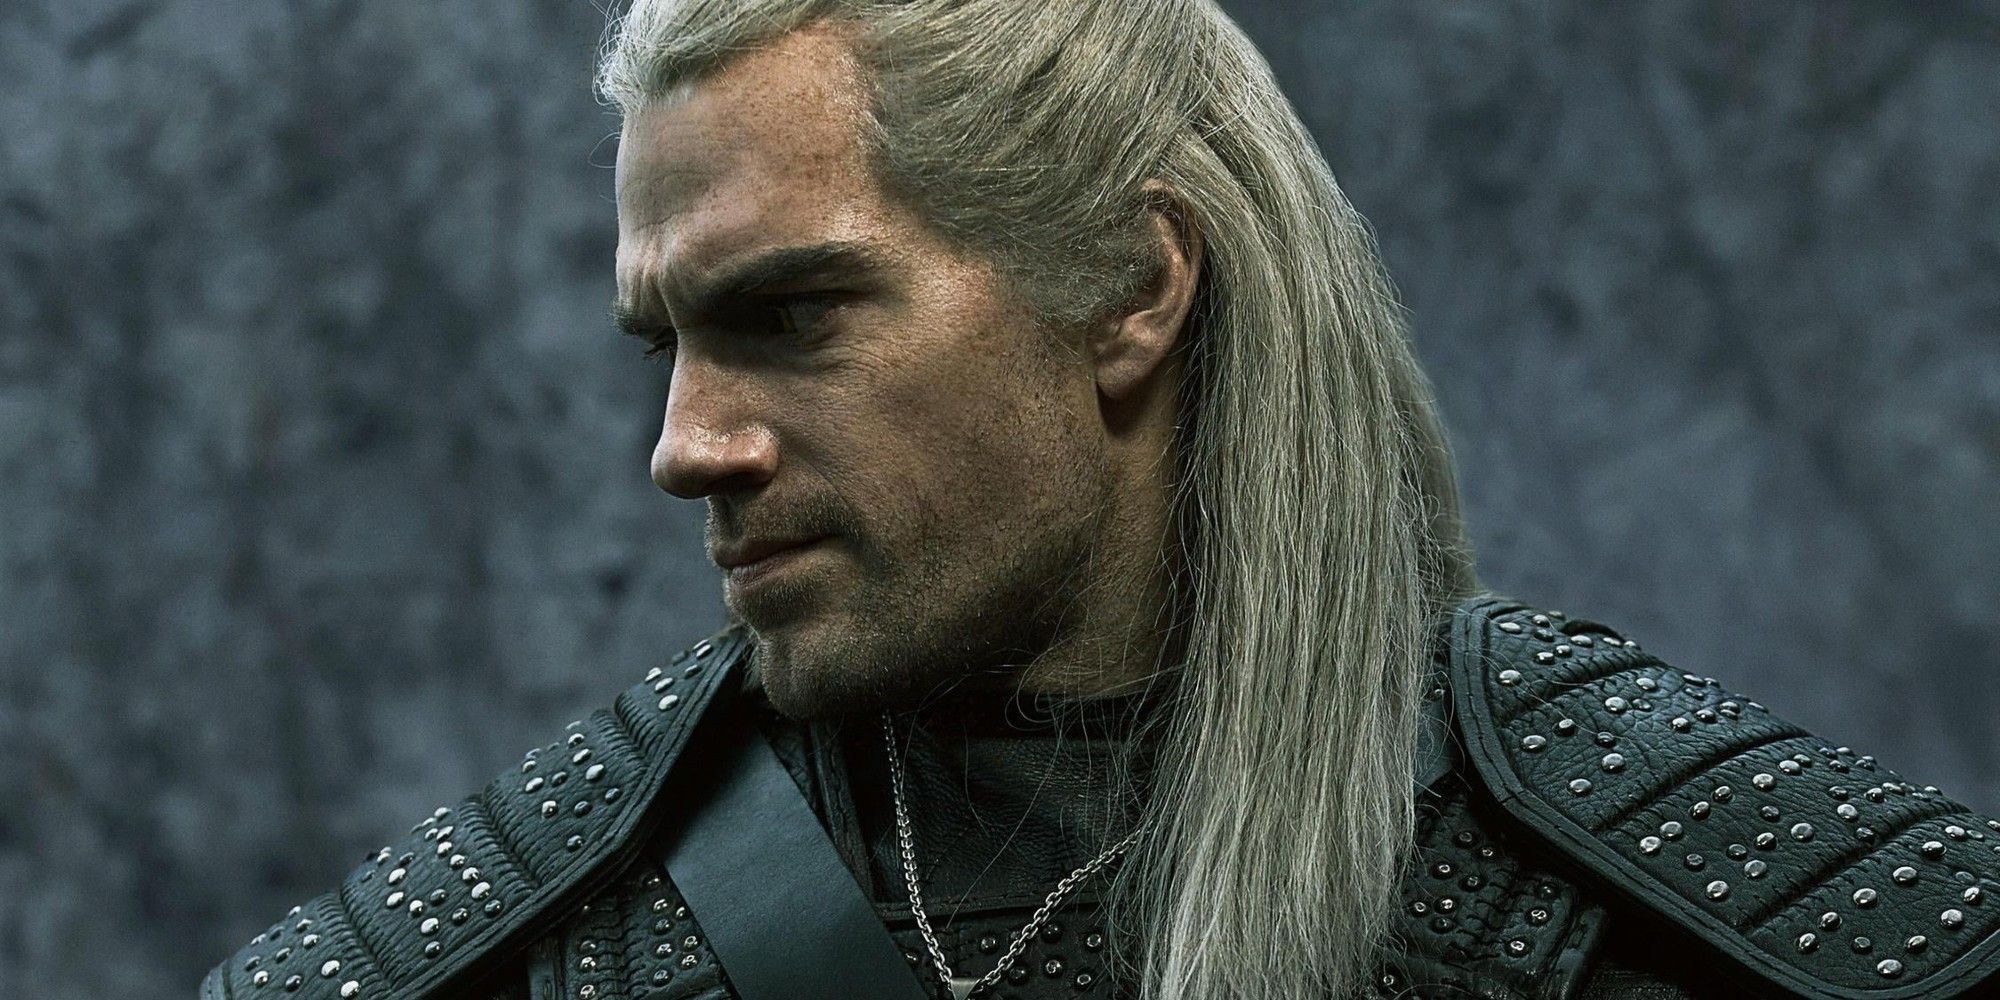 The Witcher Henry Cavill as Geralt